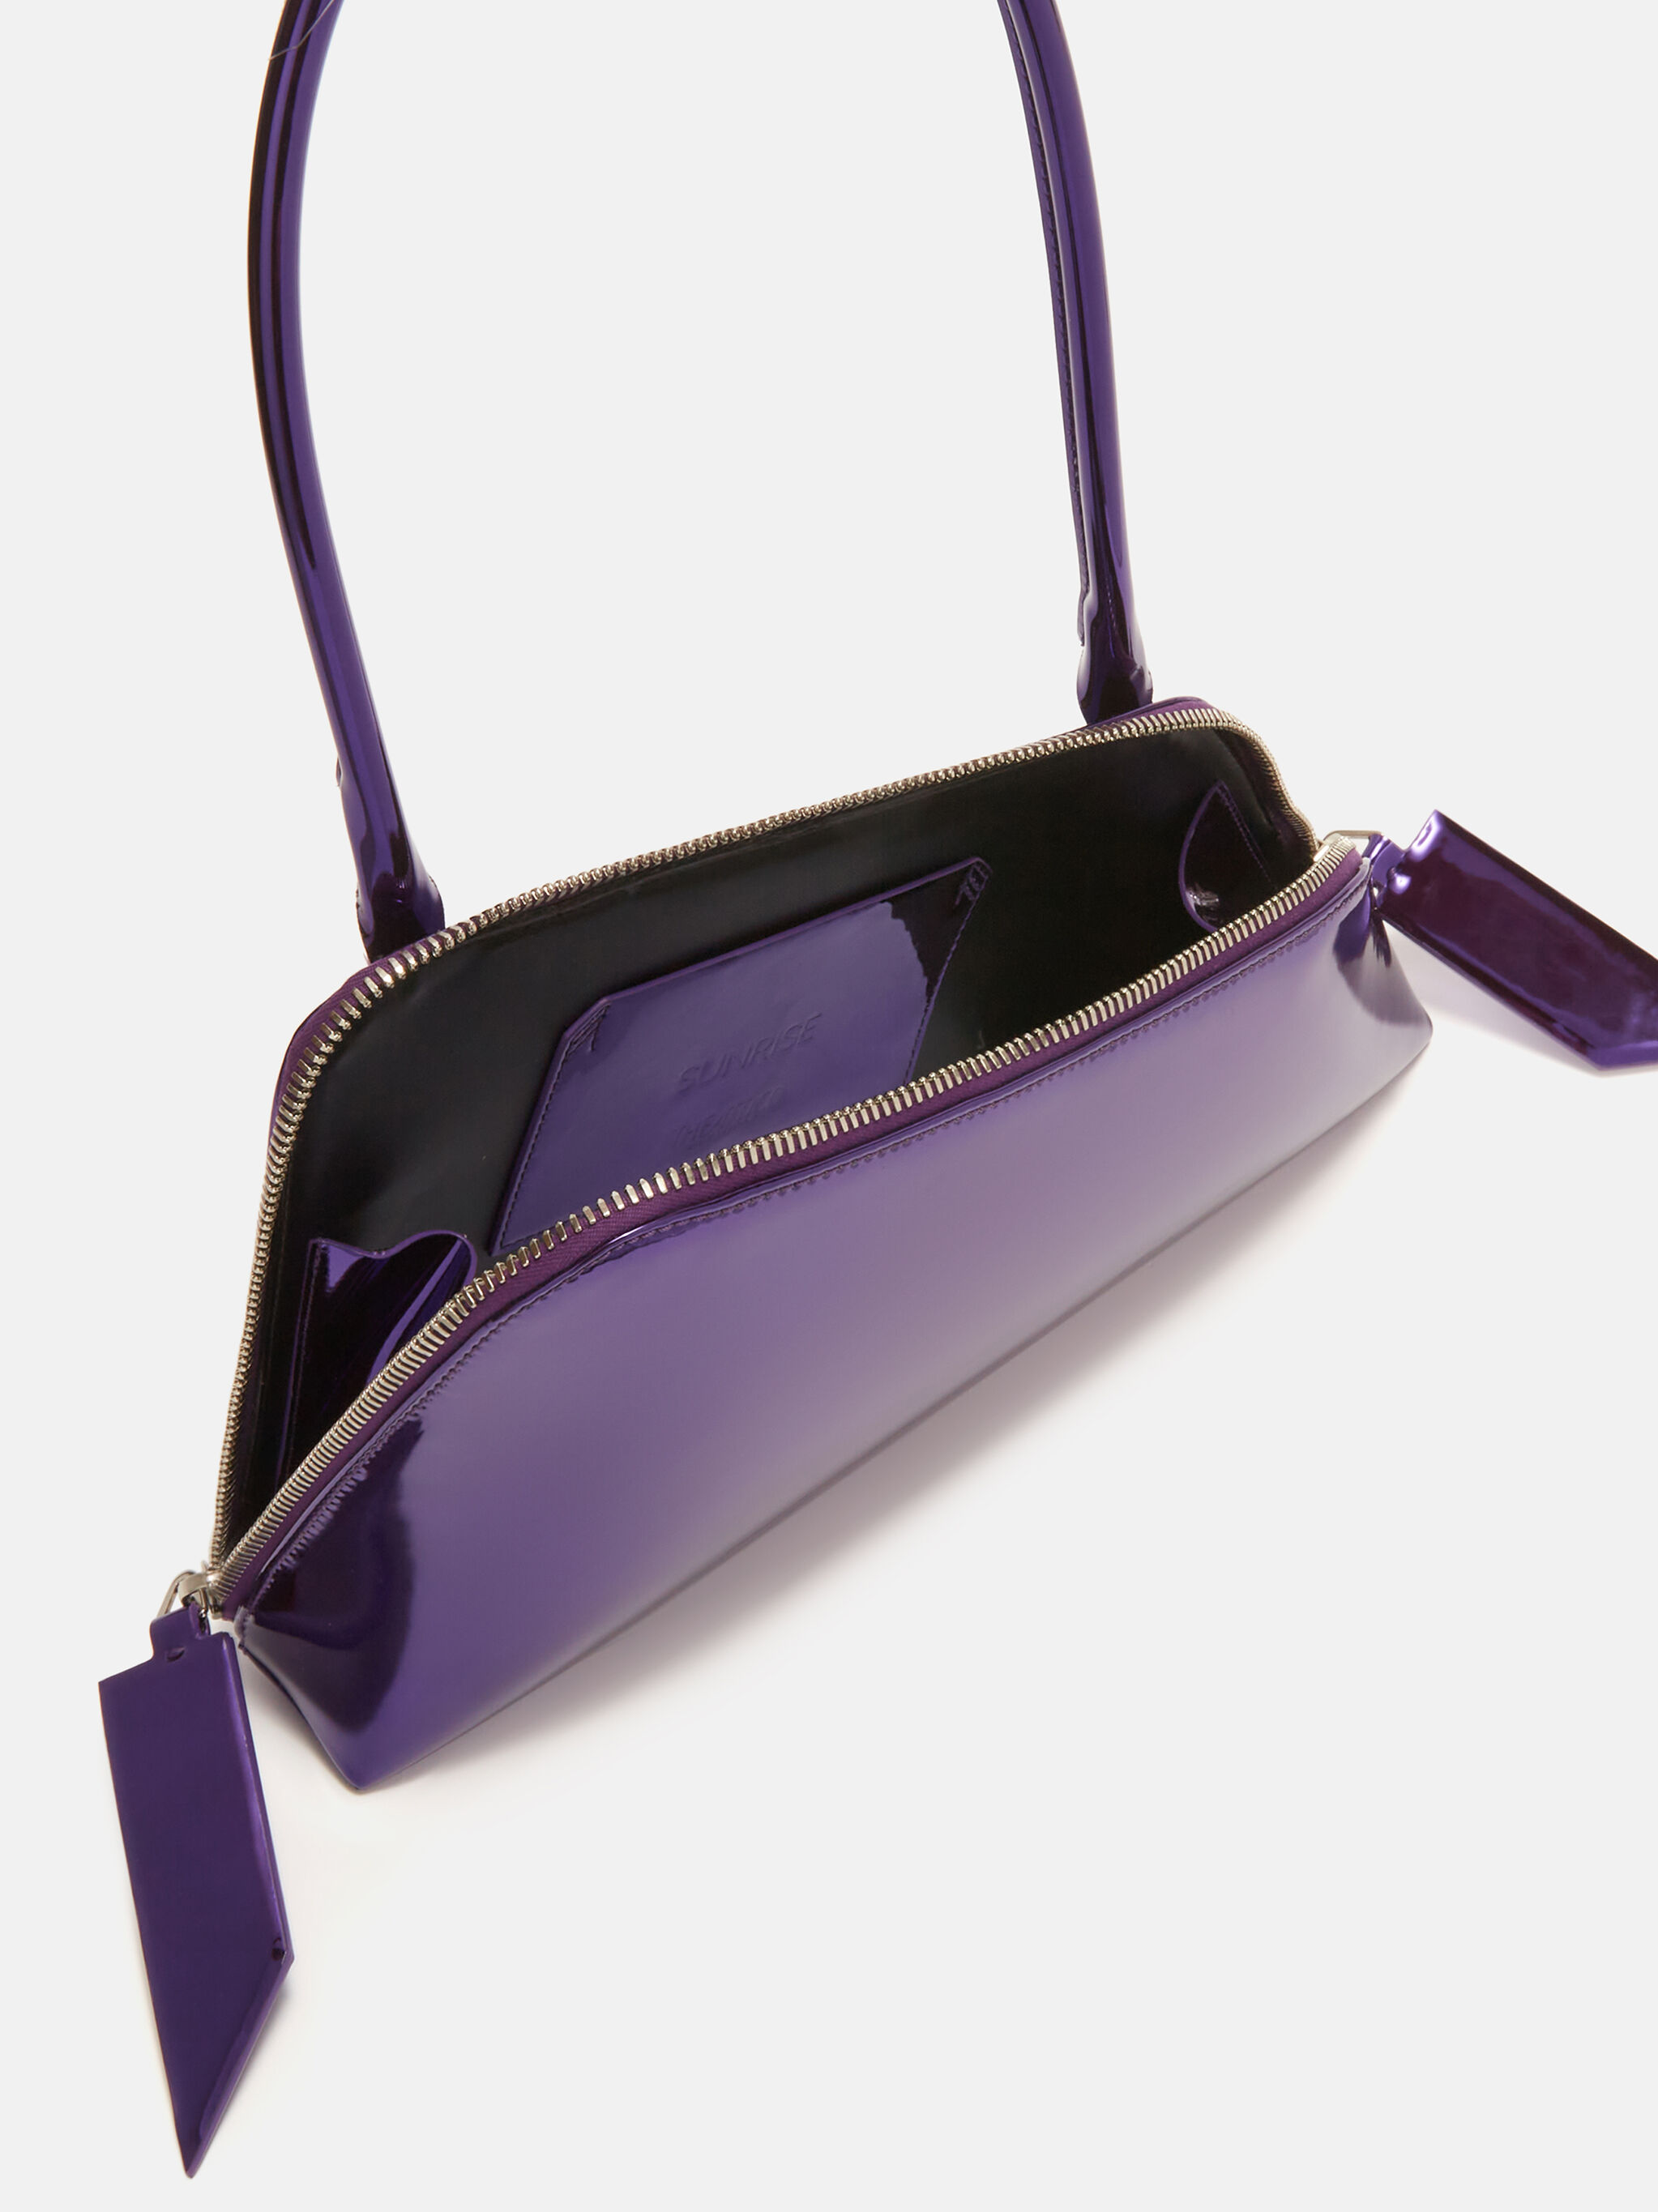 Cross-body/ shoulder bag in Crushed Grape Purple – Nelson Were